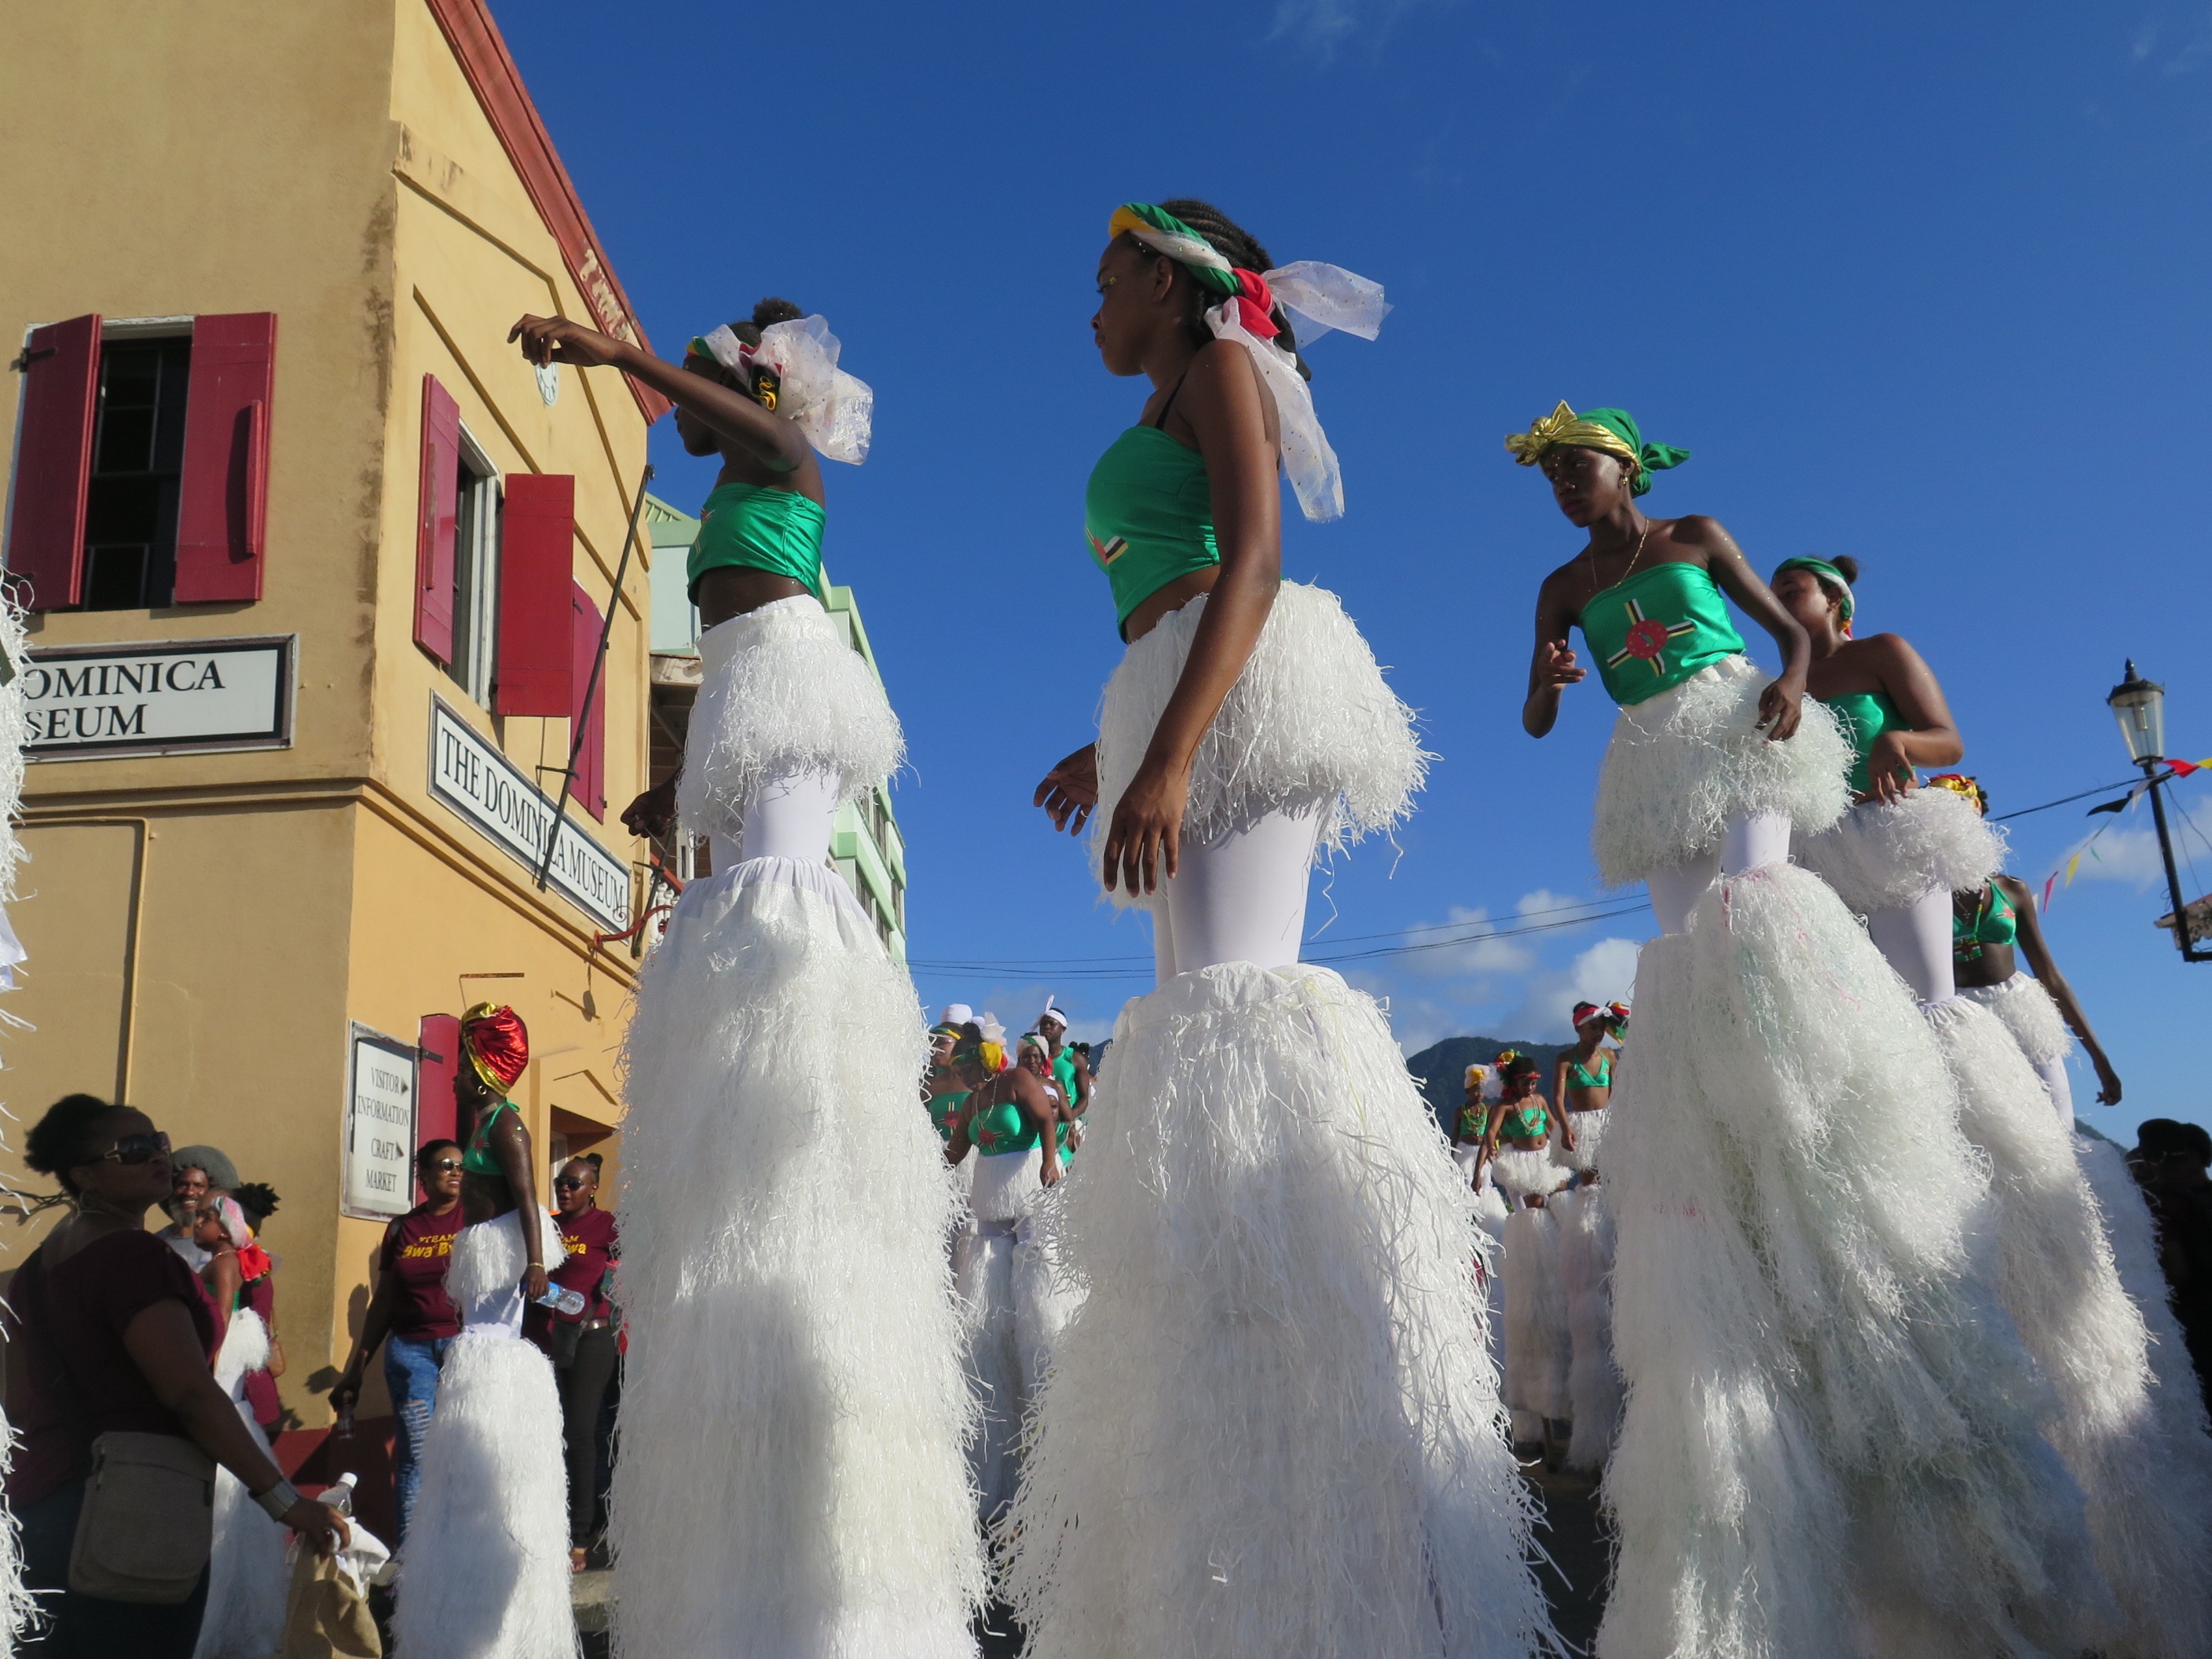 dominica carnival cruise excursions